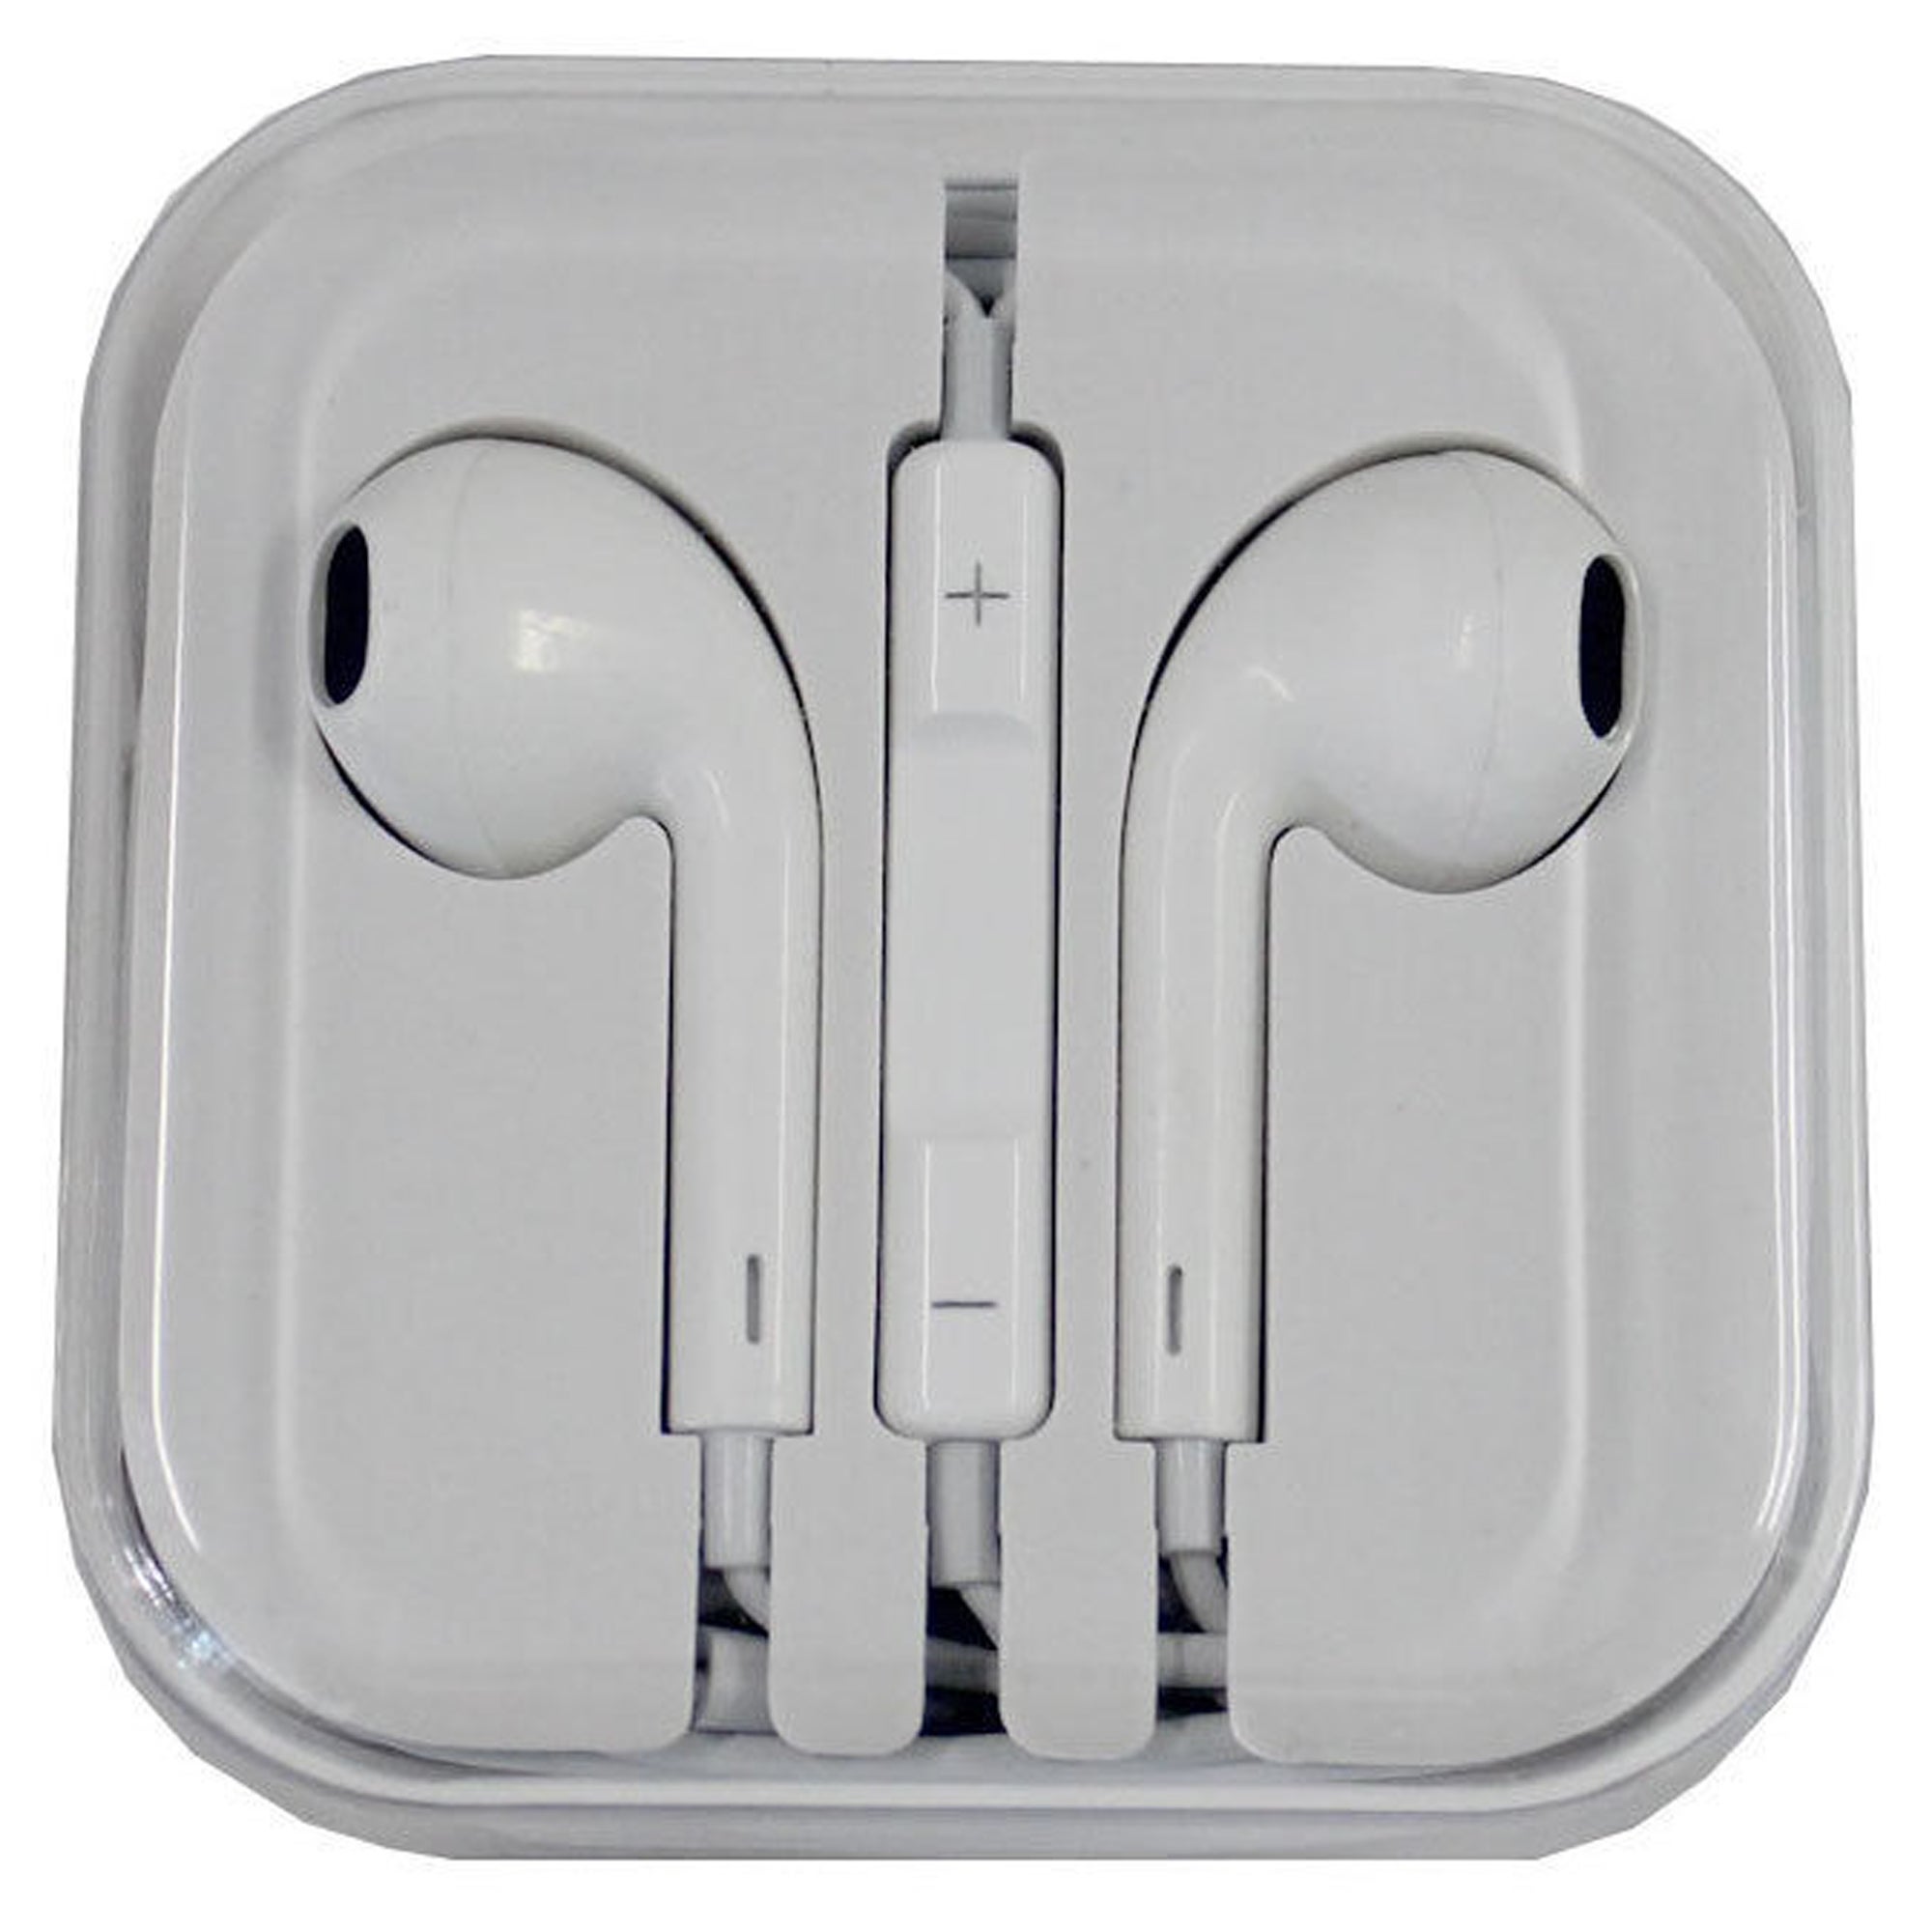 TODO Handsfree Headphone Earphone W/ Mic For Apple Iphone 5 4 4S 3Gs Ipad Ipod White